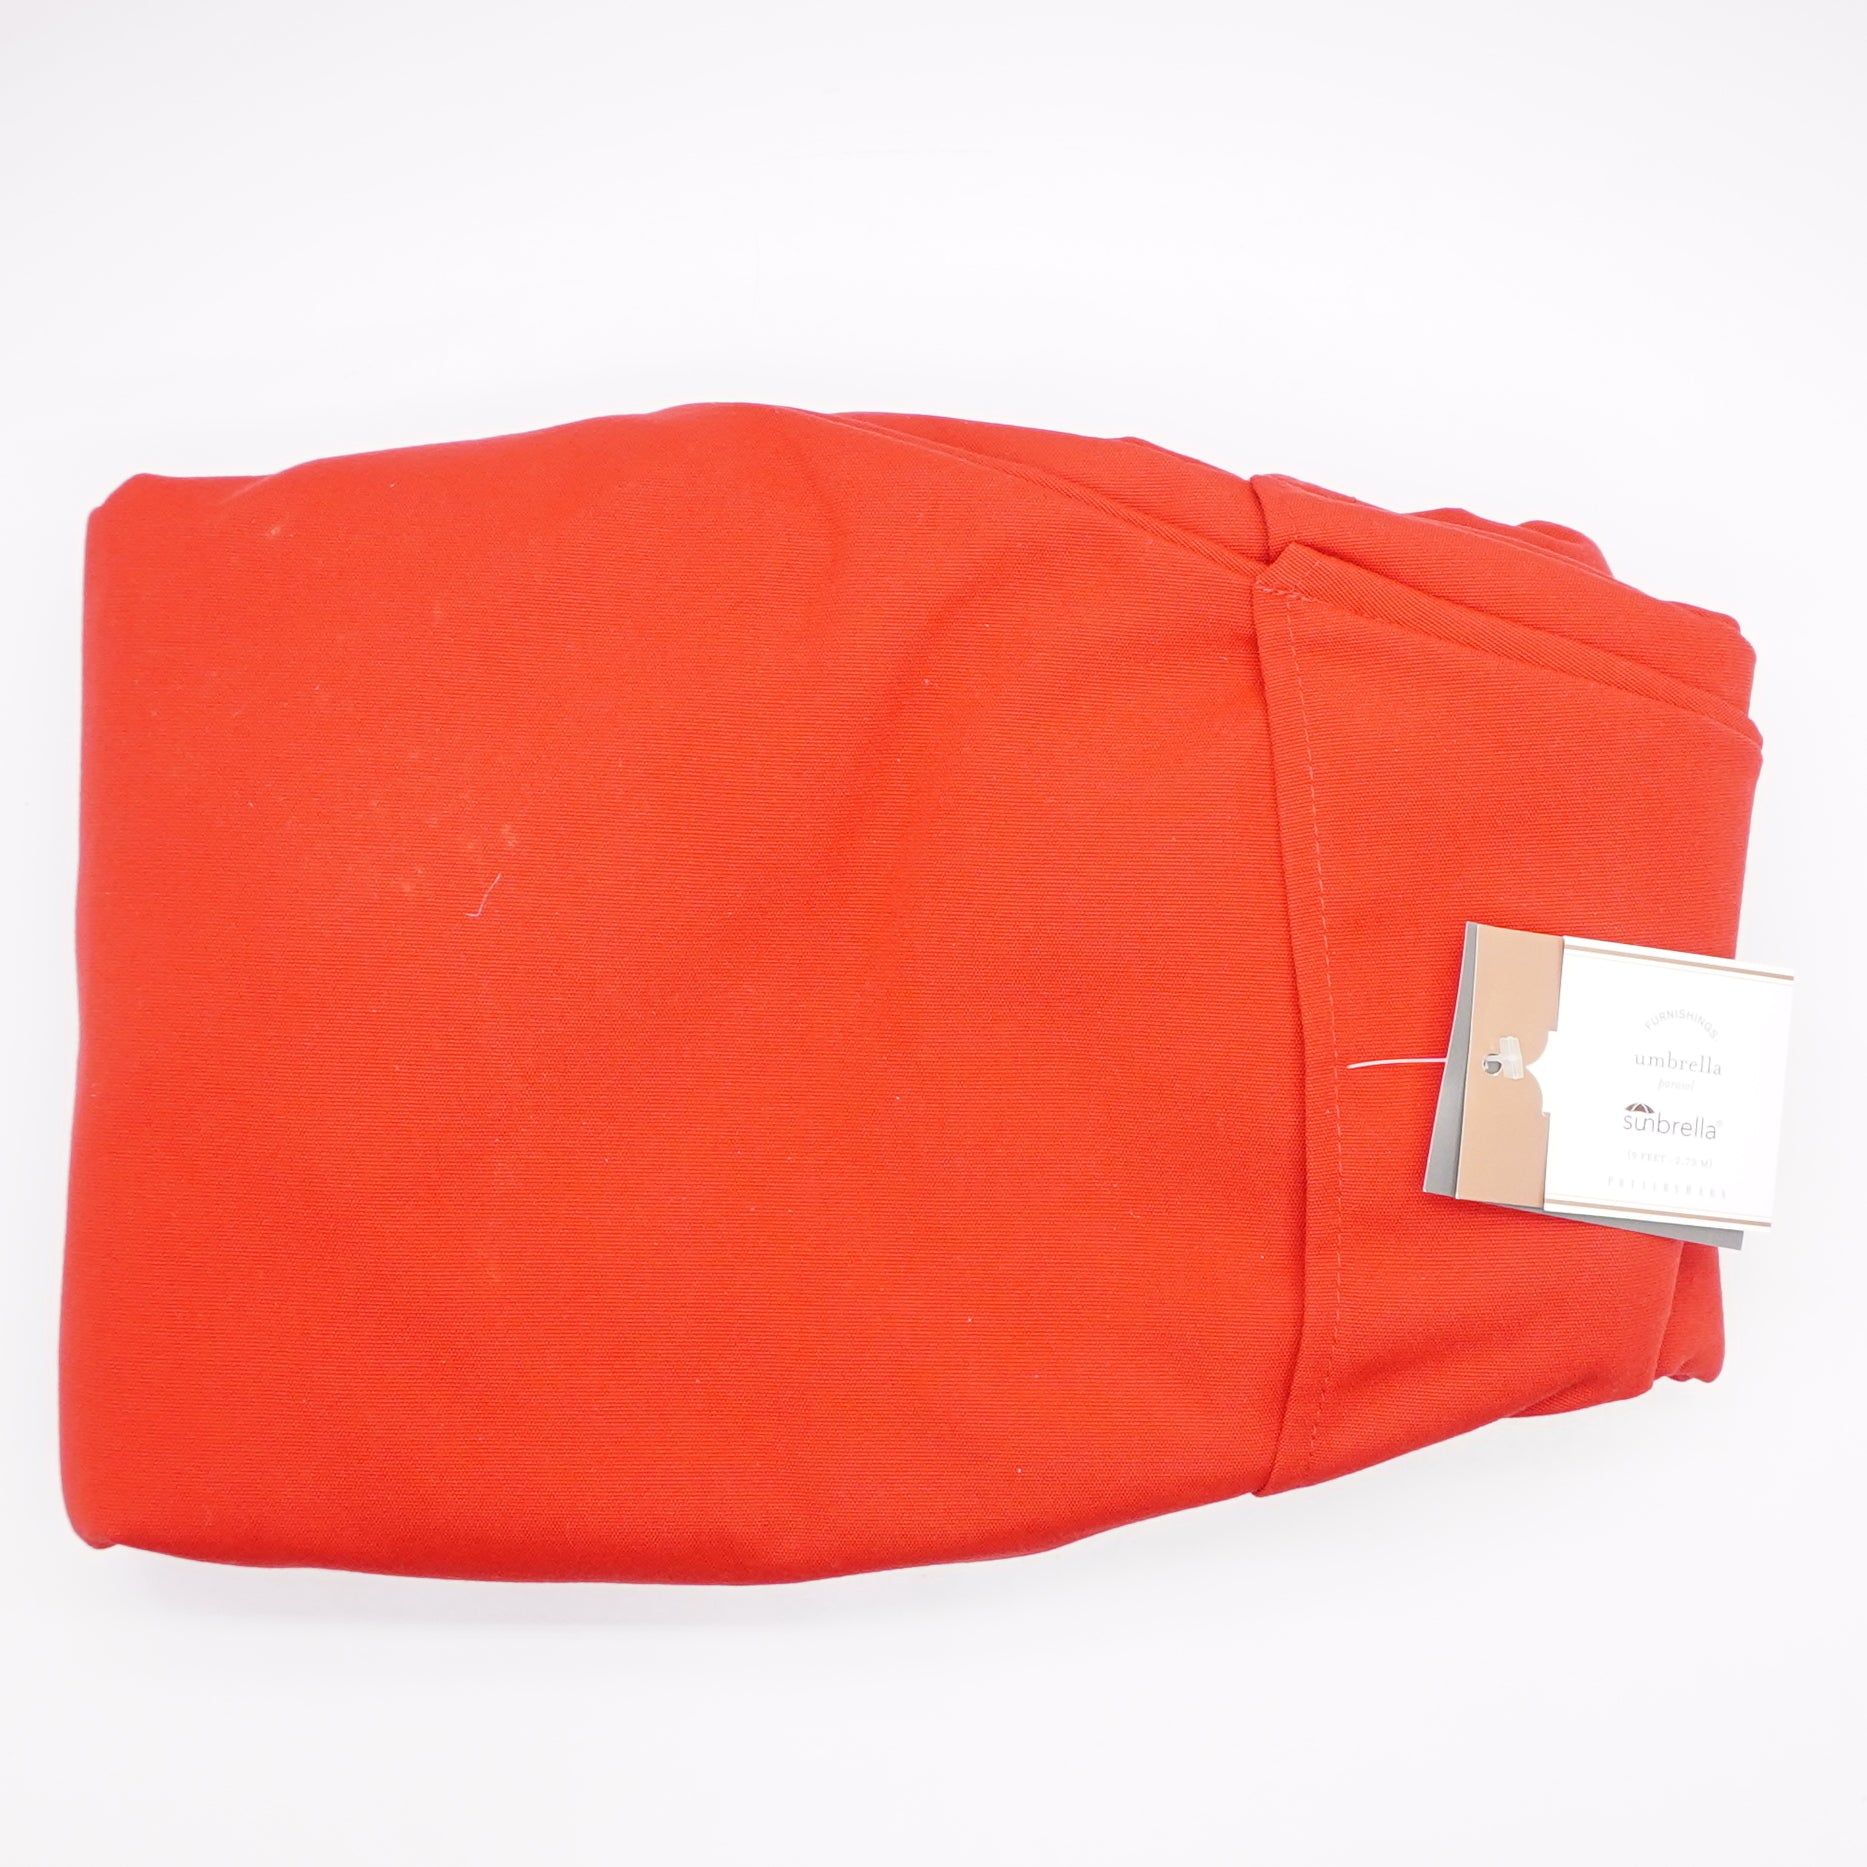 Cynthia Rowley 6 piece Orange towel set